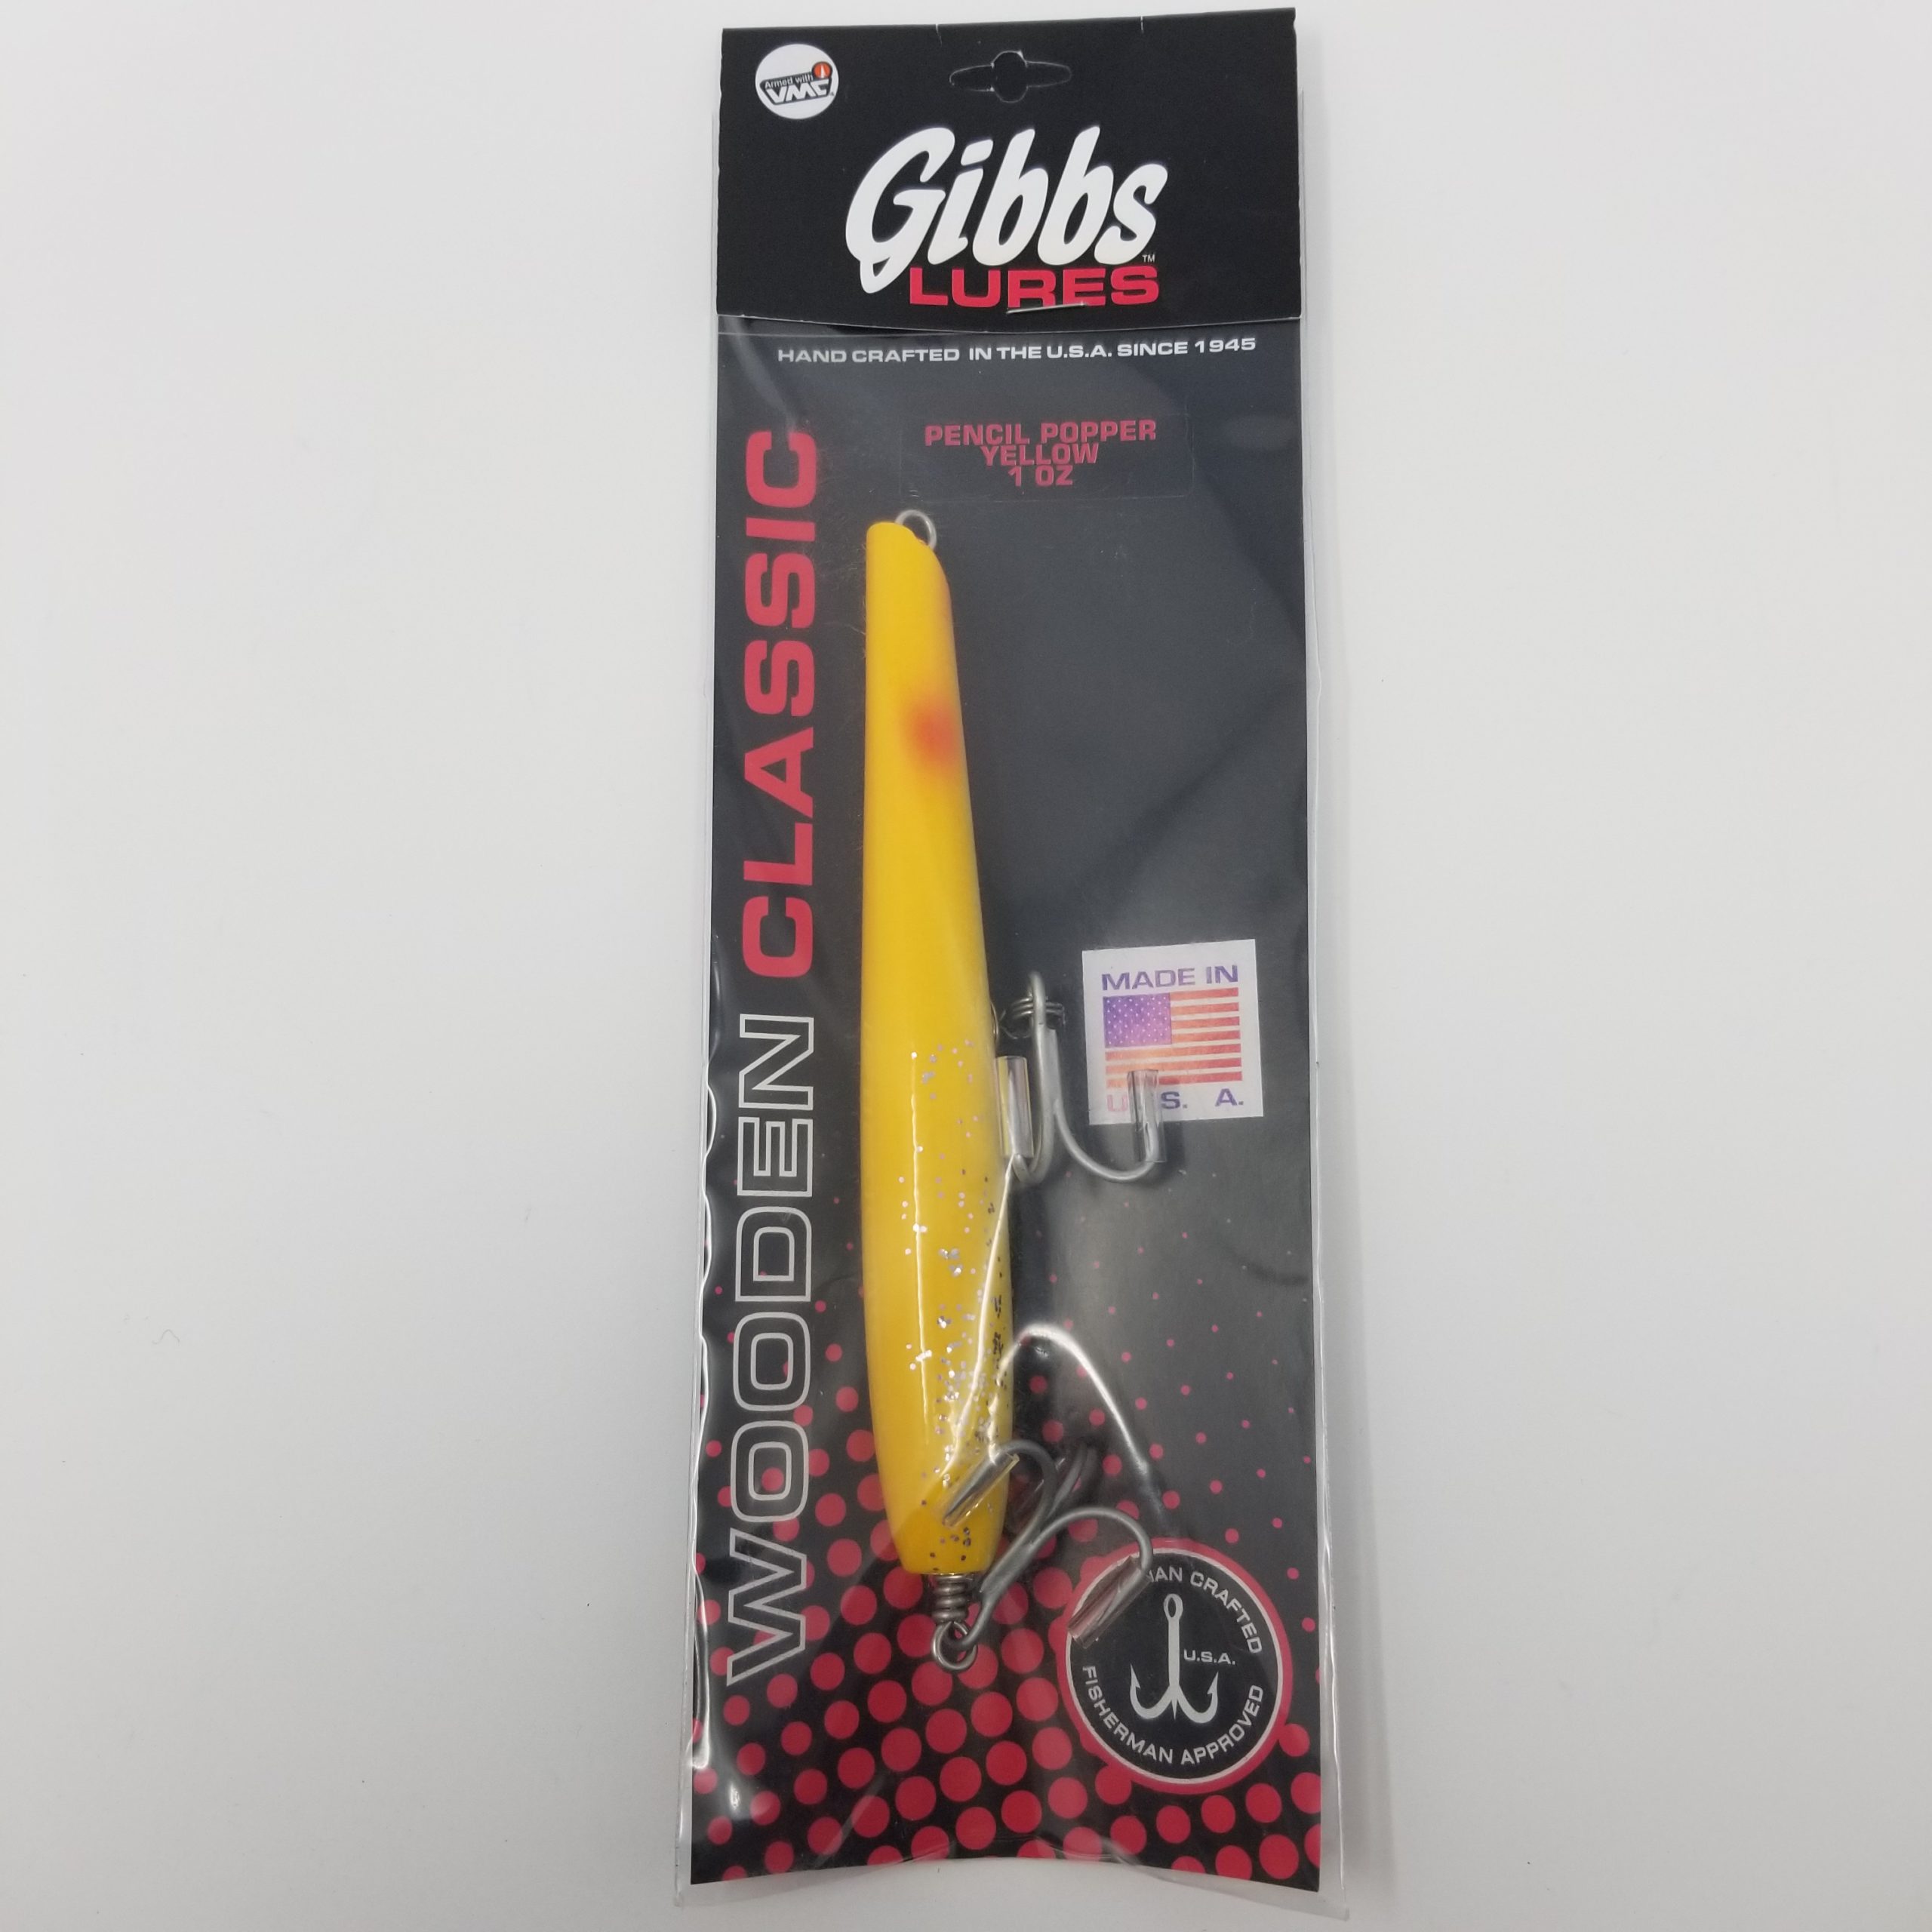 Gibbs Pencil Popper - The Salt Warrior LLC